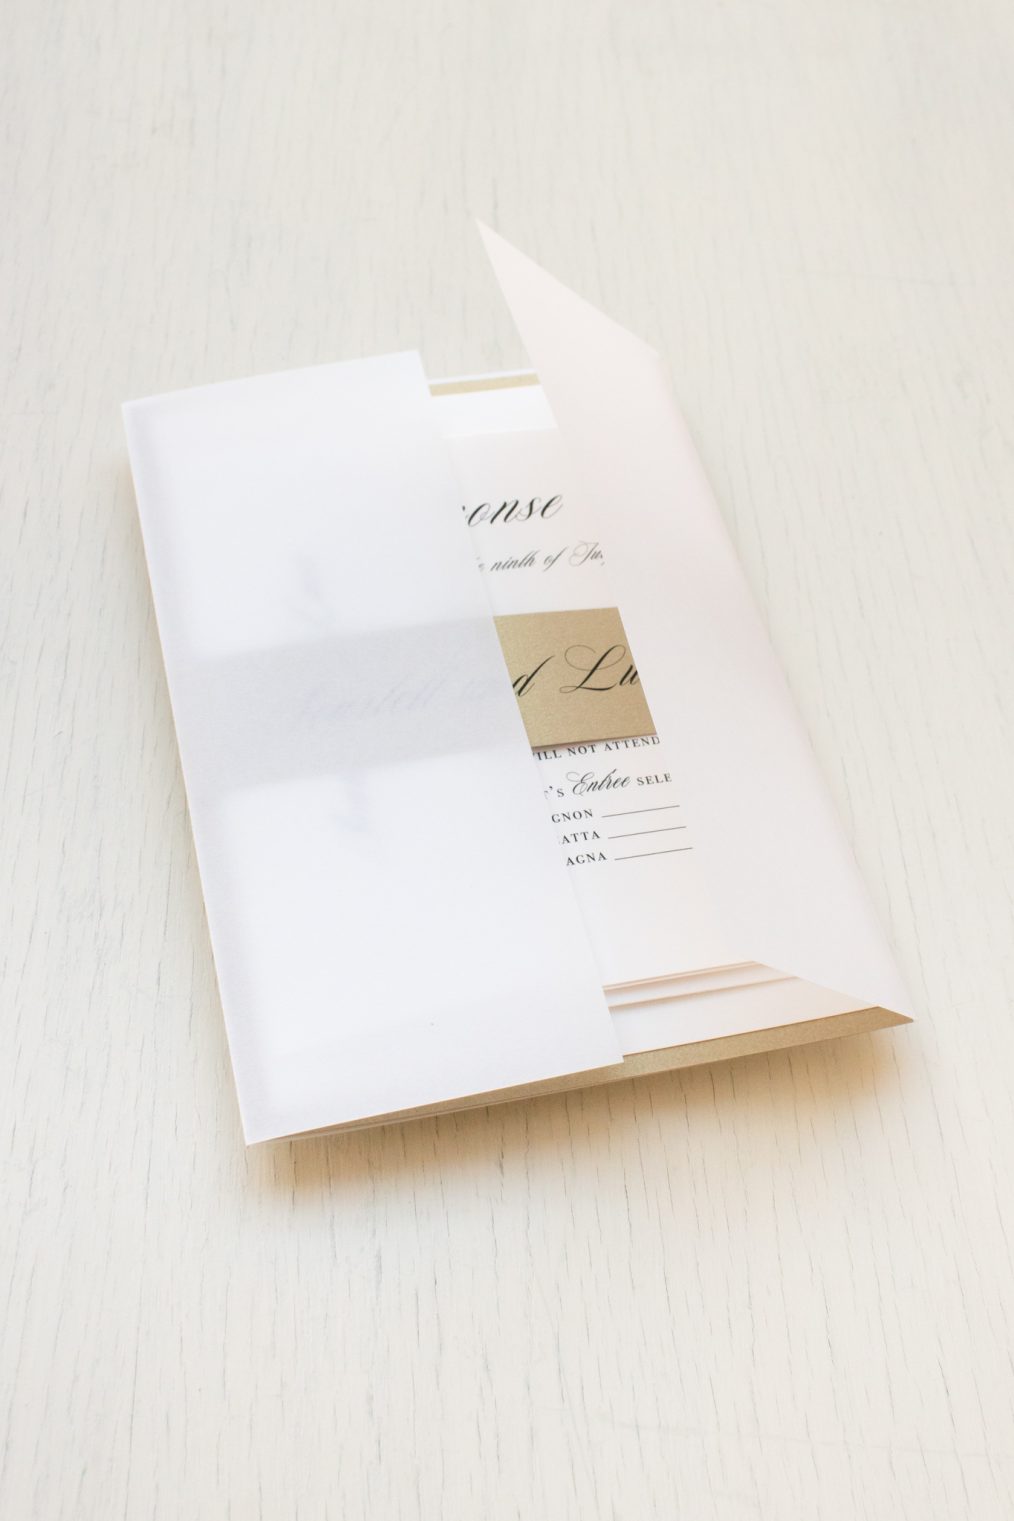 White & gold wedding invitations